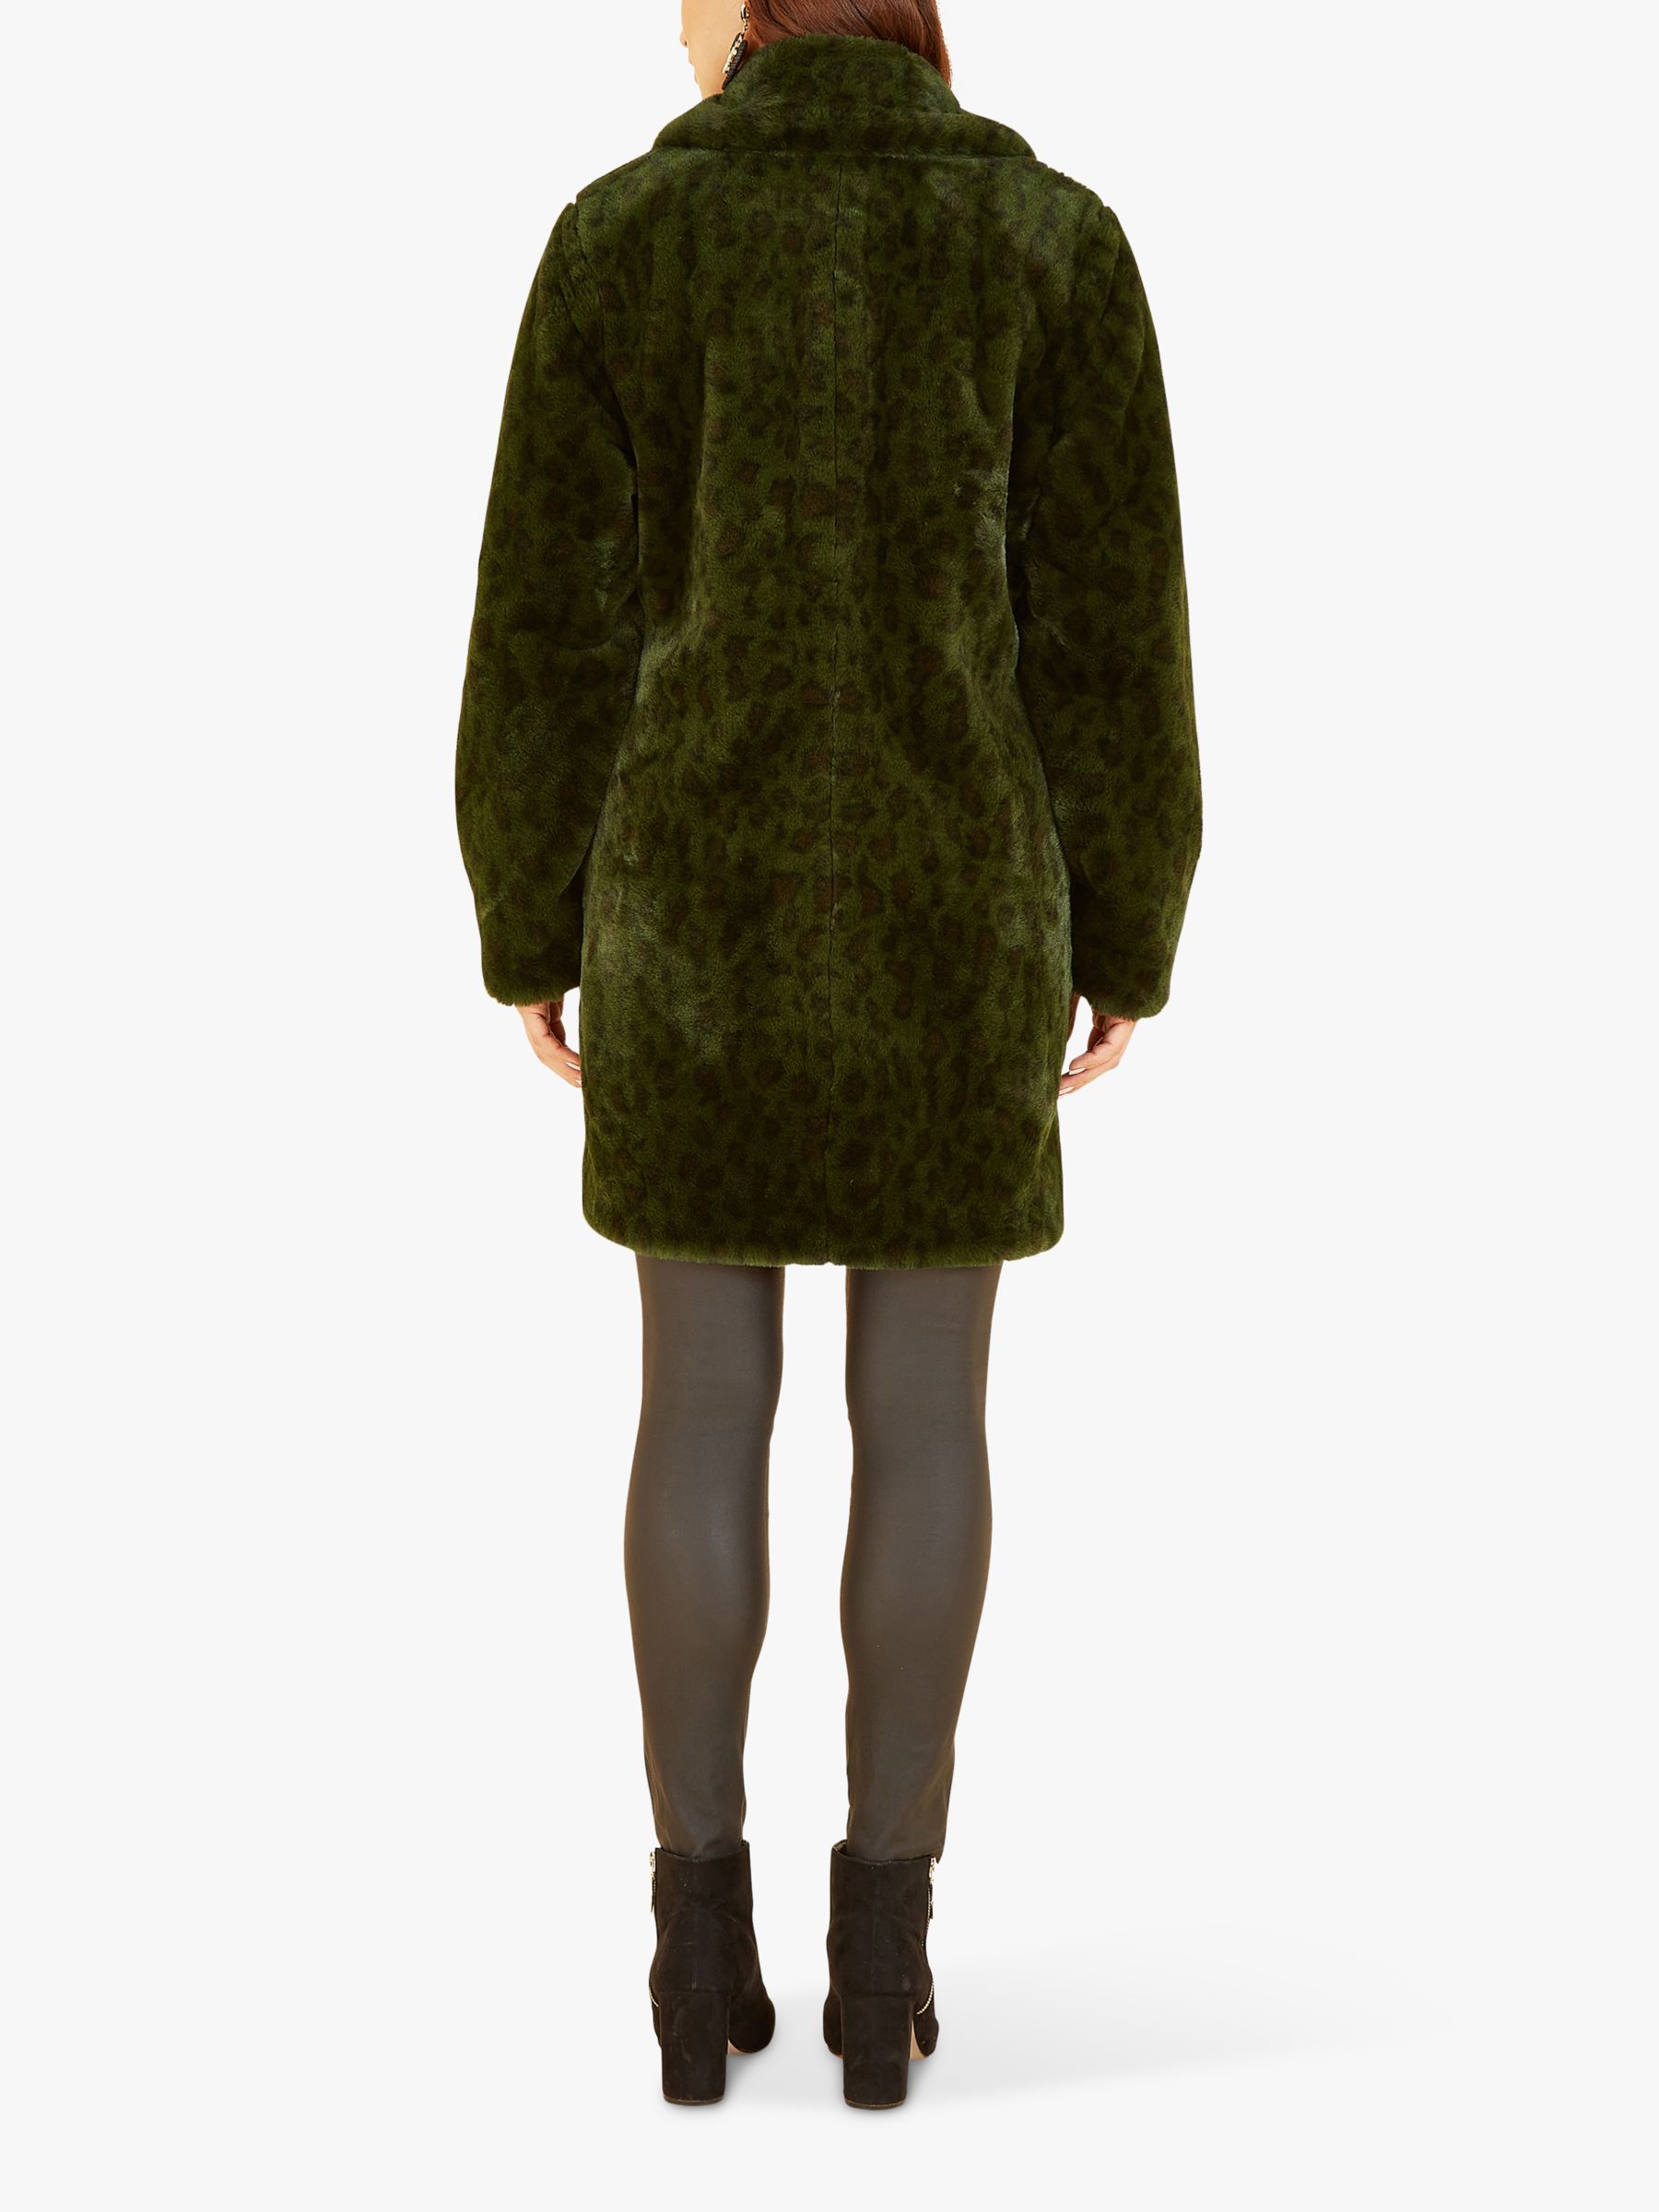 Yumi Luxe Leopard Print Faux Fur Coat, Green